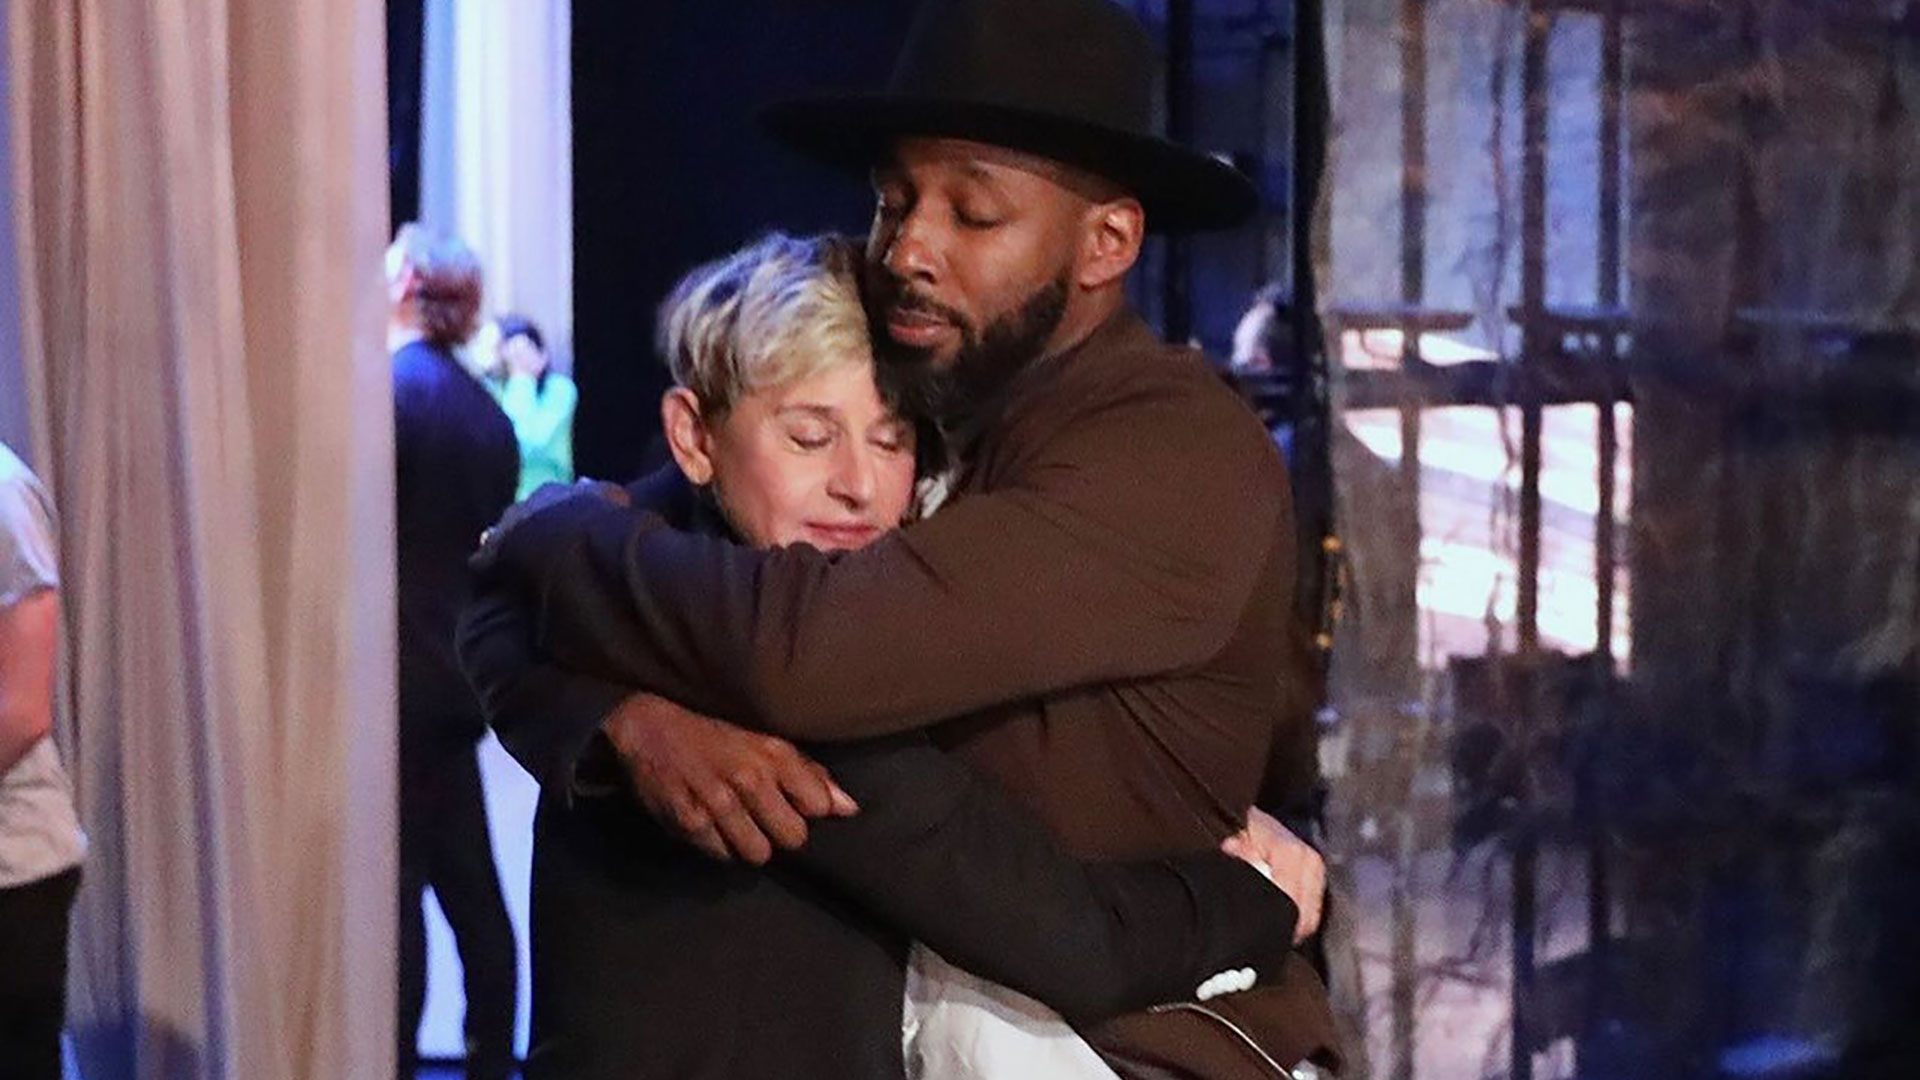 Ellen DeGeneres' farewell to her friend Stephen 